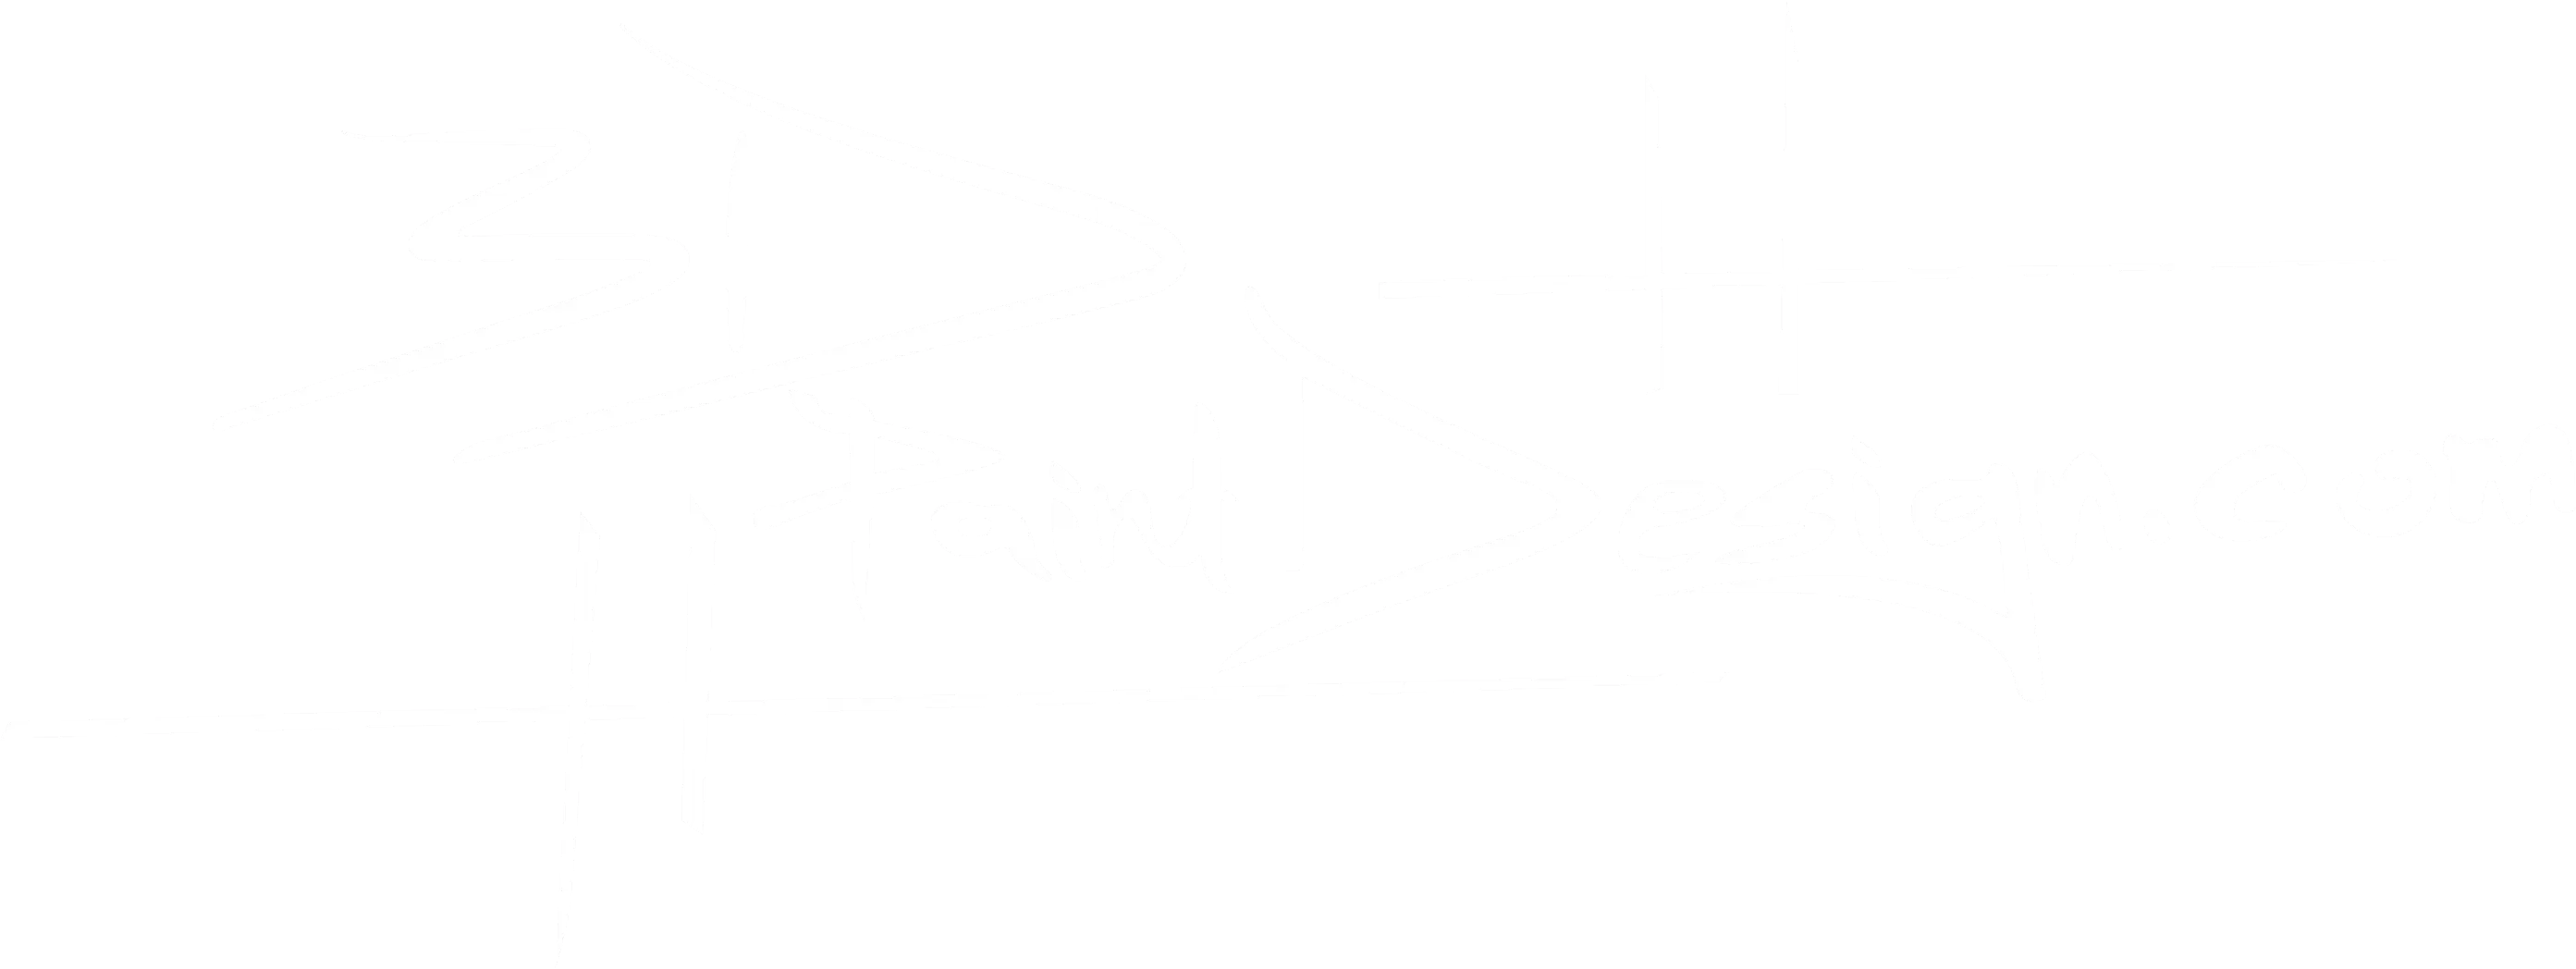 3DPaintDesign - aircraft paint design service